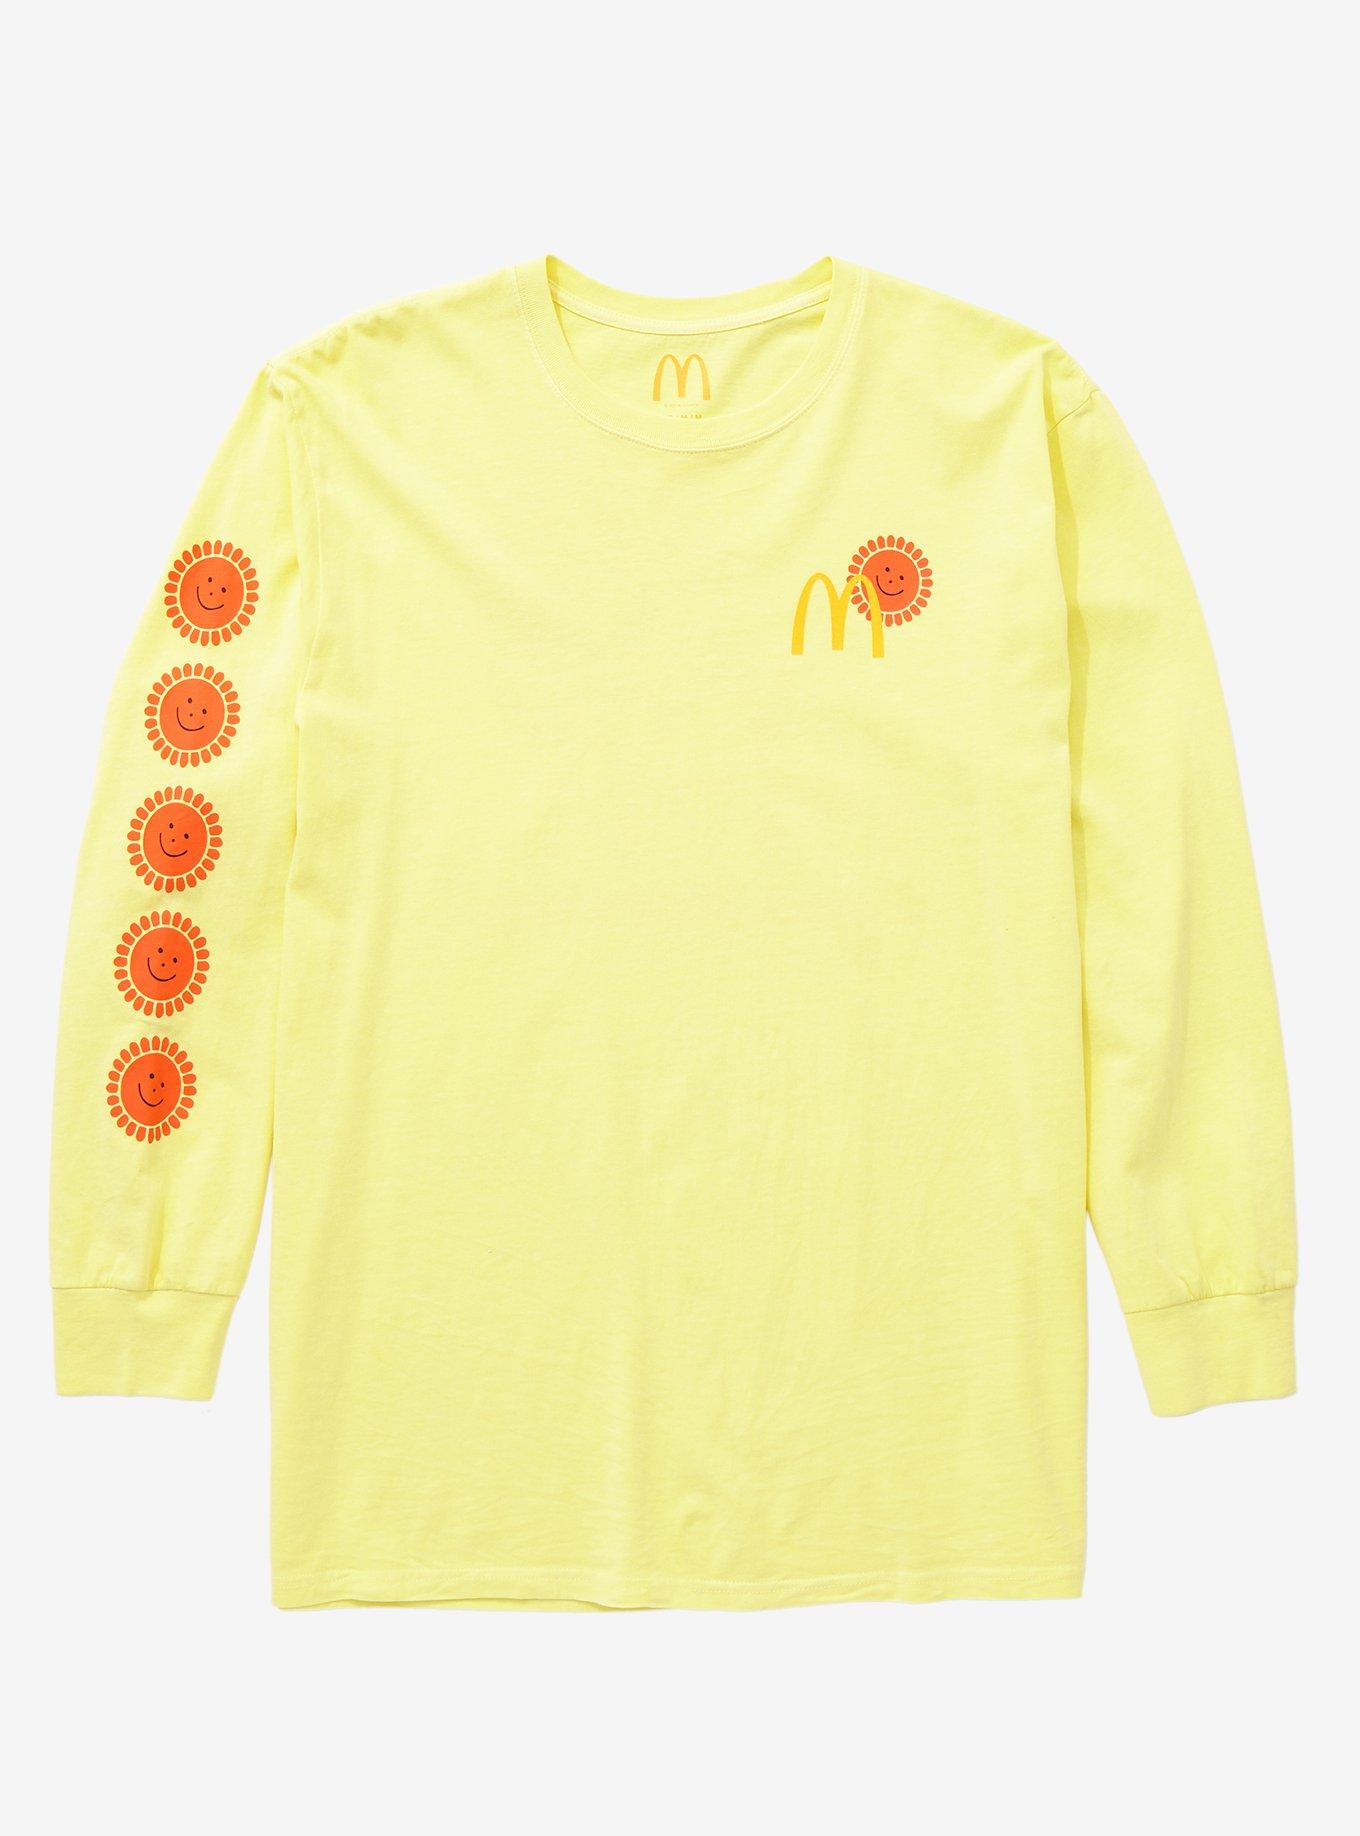 McDonald’s Good Morning Long Sleeve T-Shirt - BoxLunch Exclusive, LIGHT YELLOW, hi-res